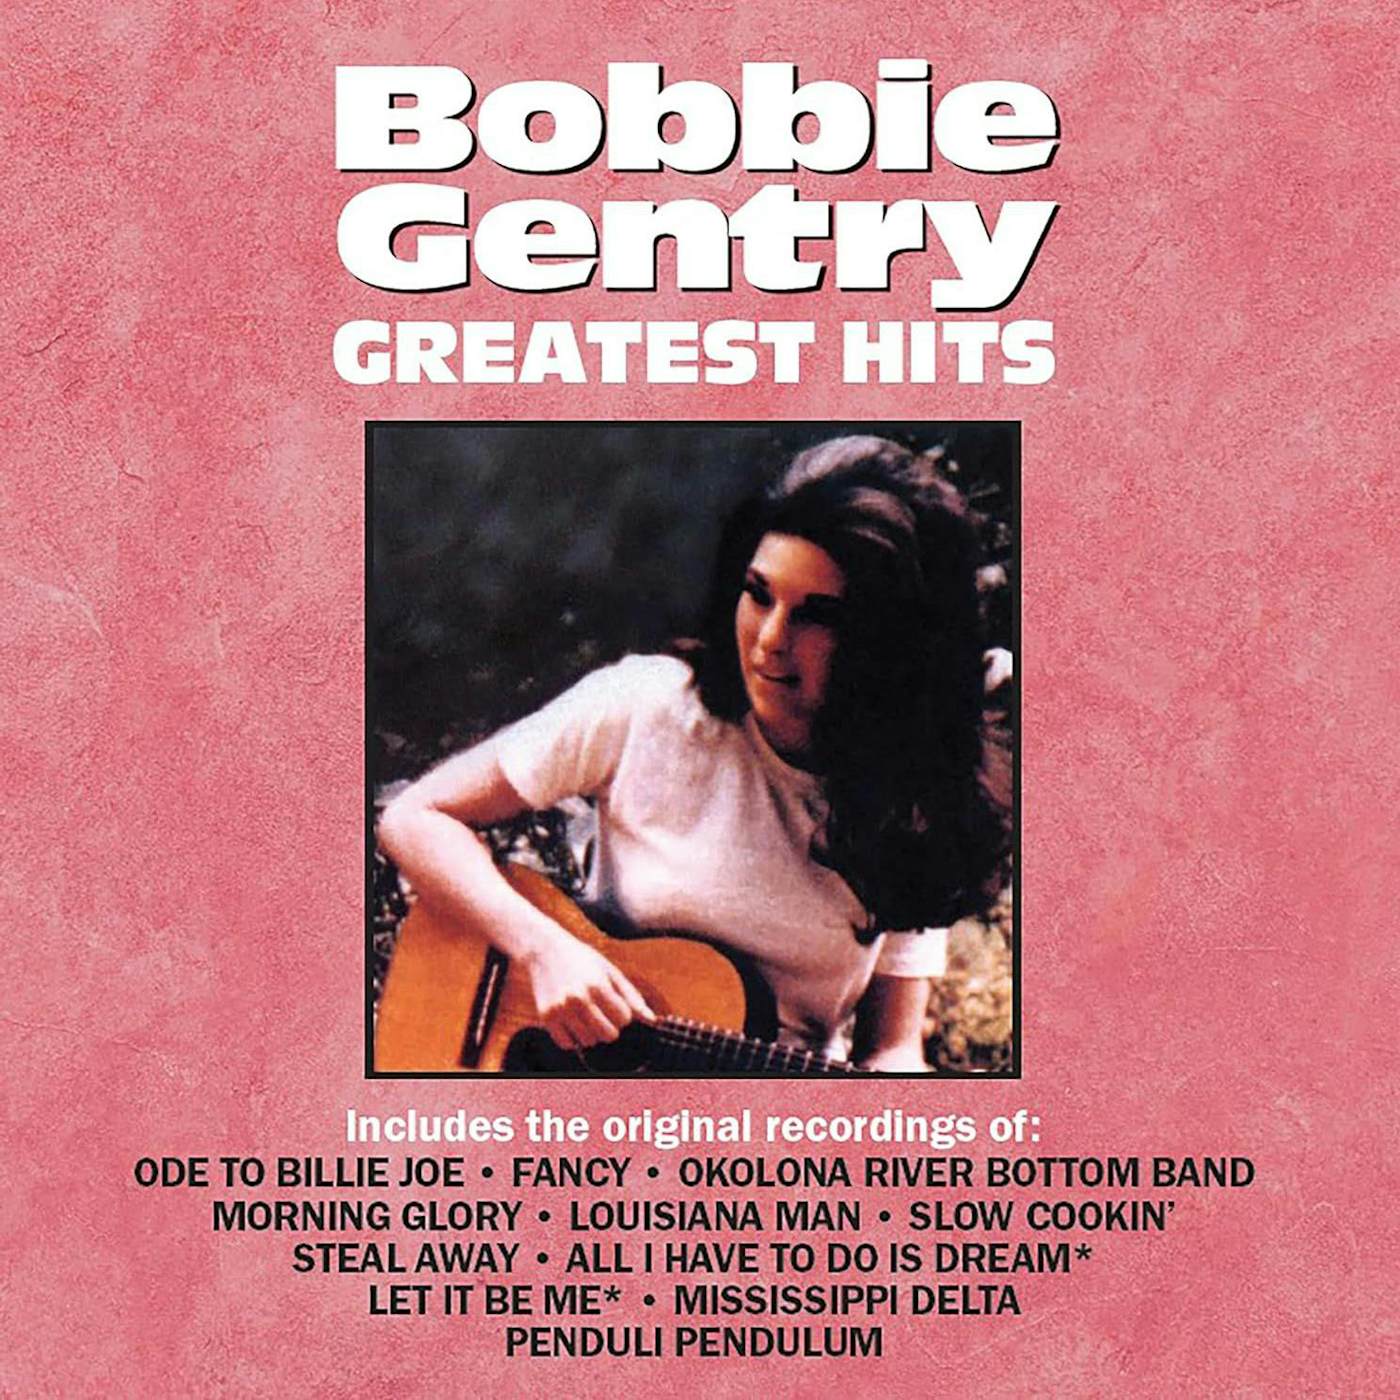 Bobbie Gentry Greatest Hits Vinyl Record